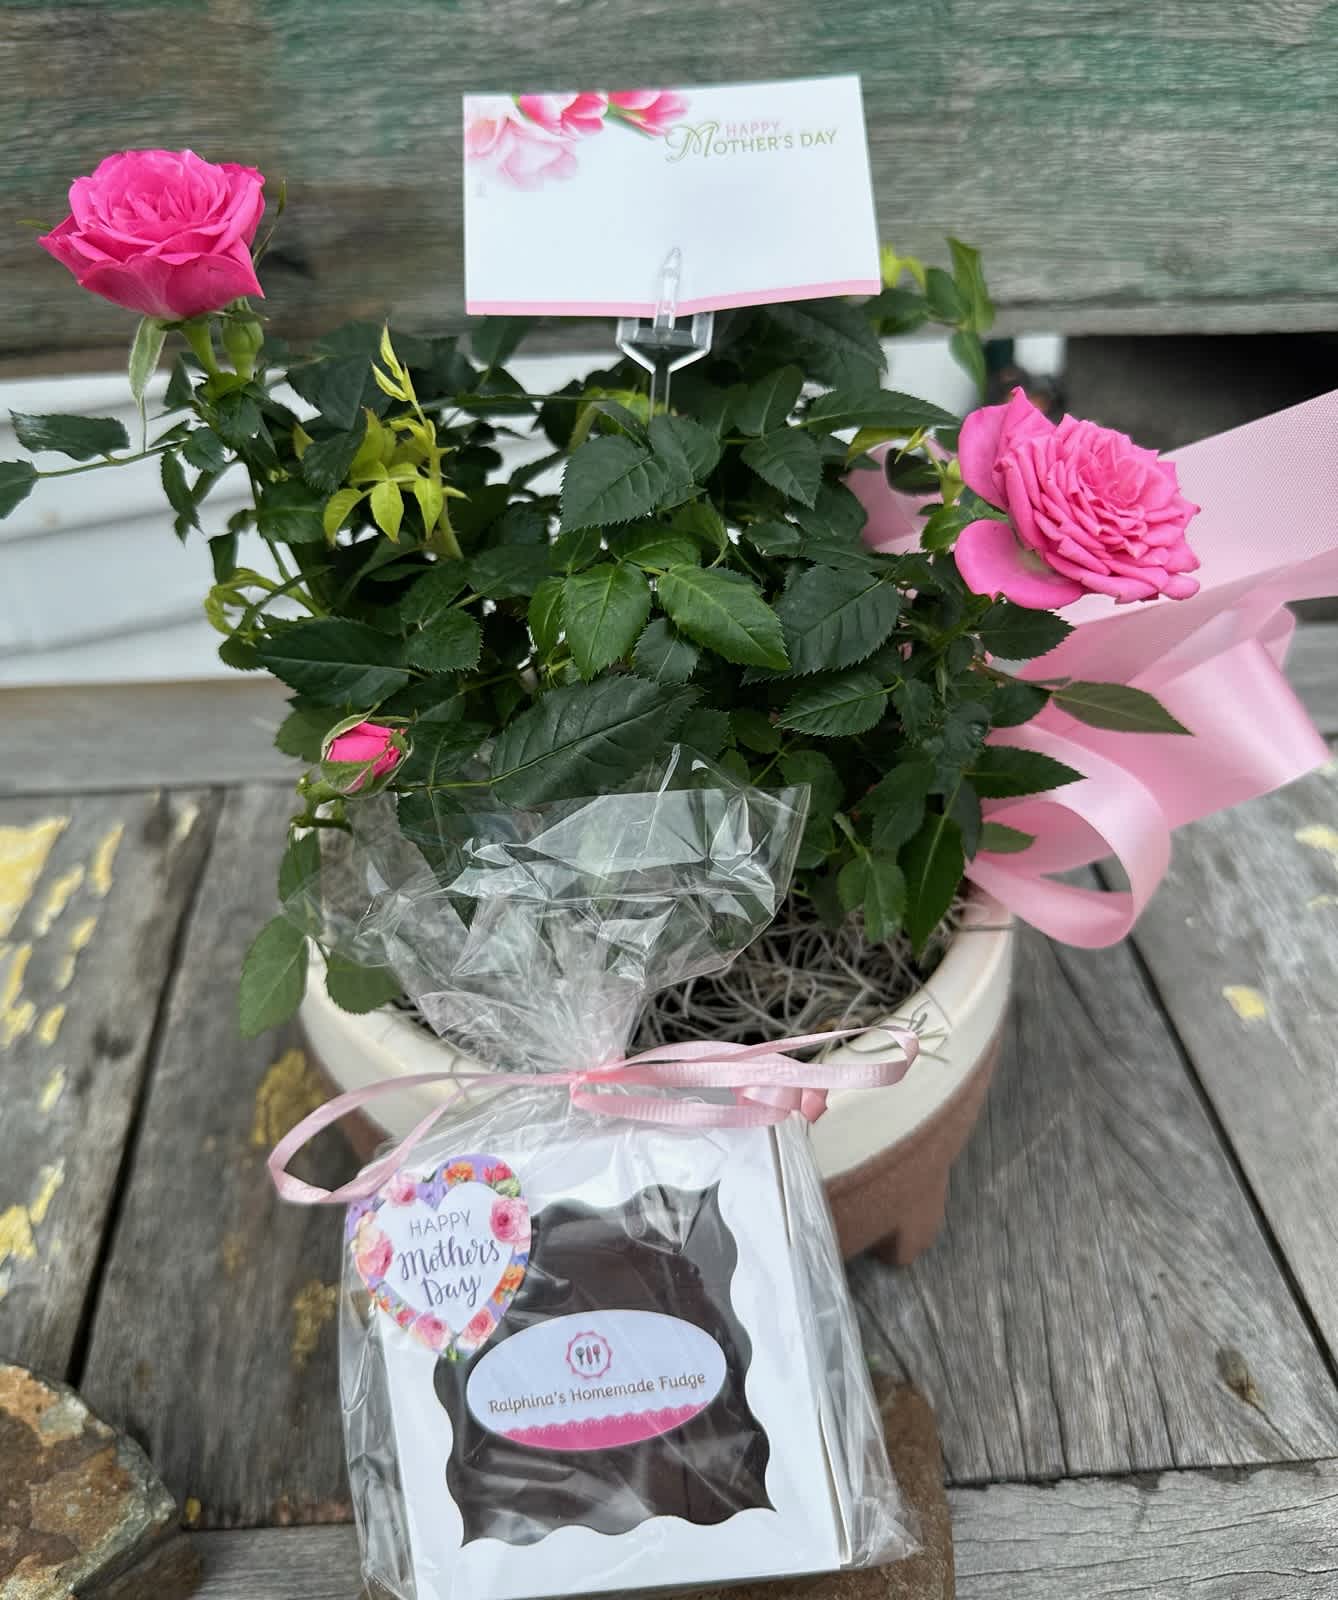 Mini Rose Bush And Fudge For Mom - Mini Rose bush and sweet Ralphina's fudge for Mom